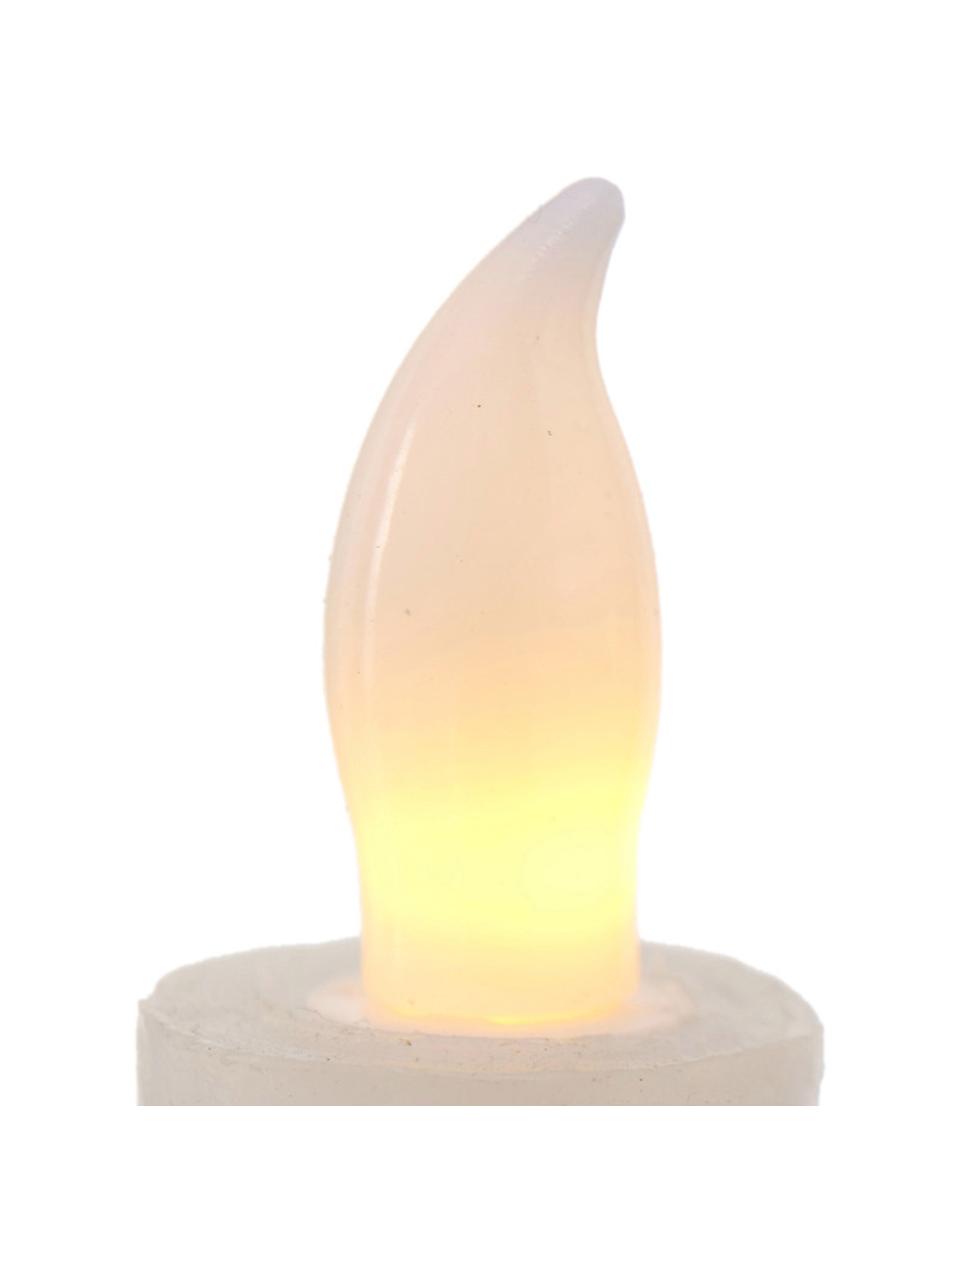 LED Kerzen Vilago, 2 Stück, Wachs, Weiß, Ø 2 x H 24 cm